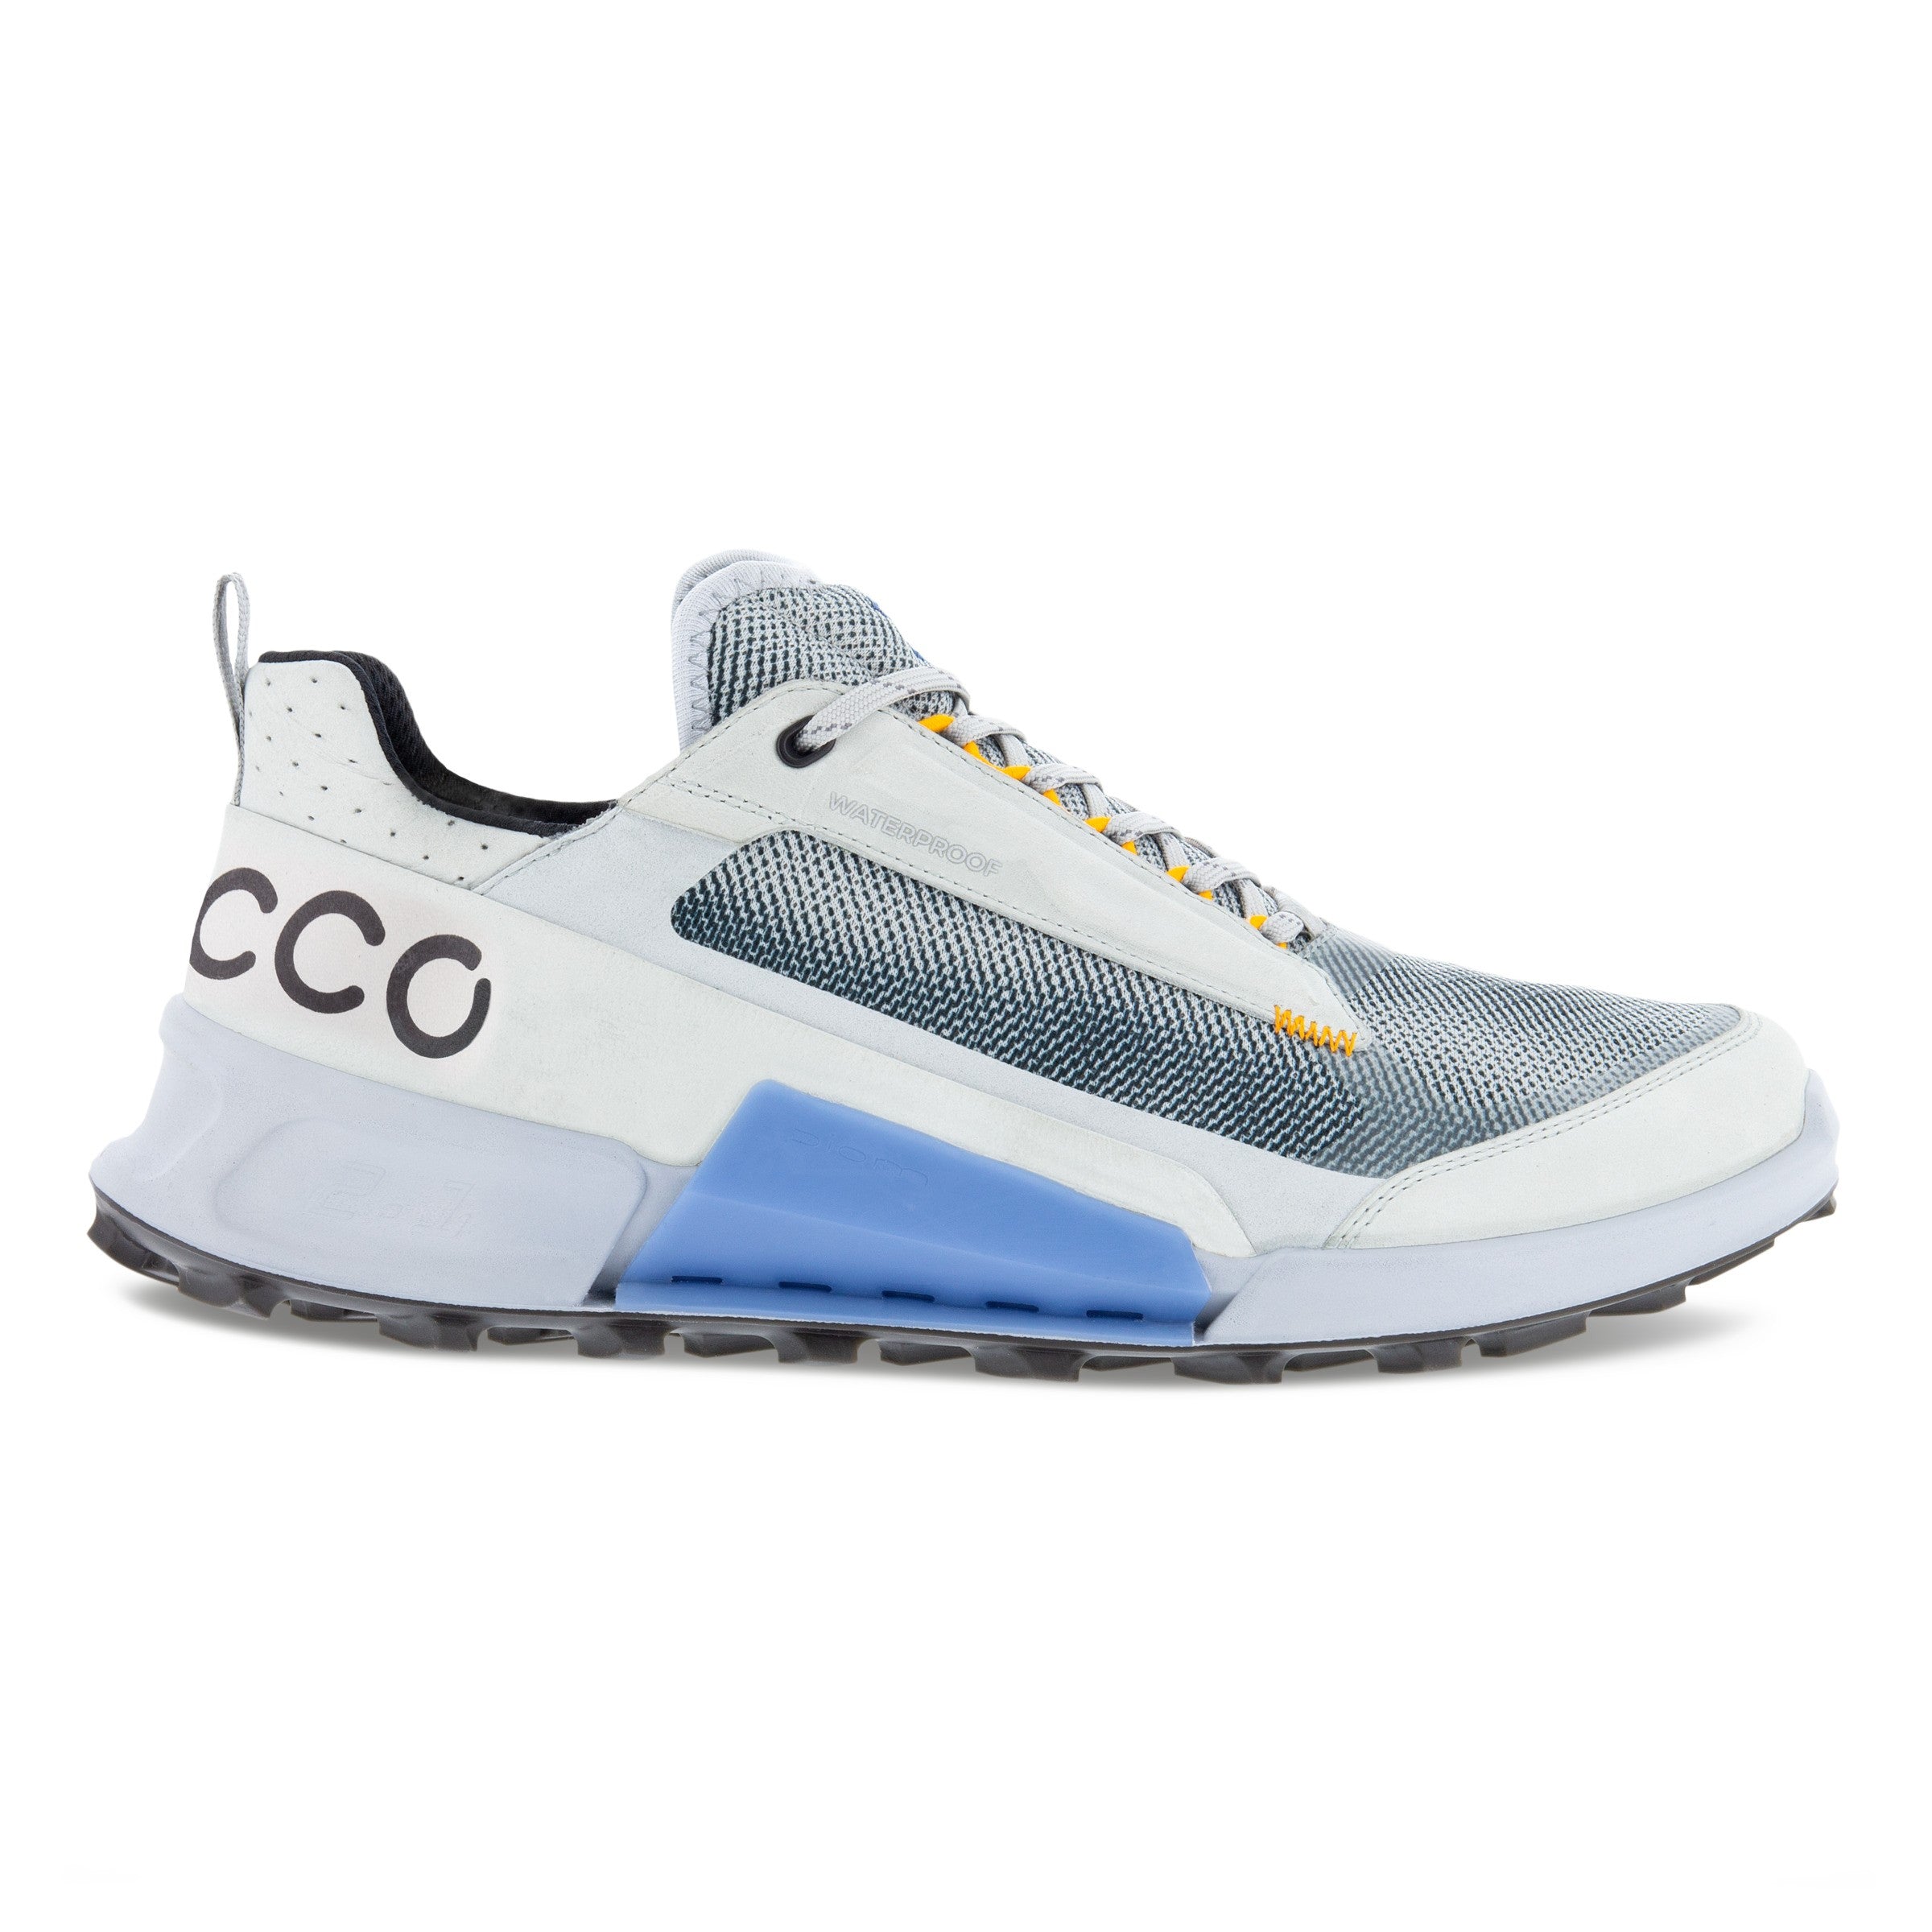 Ecco Men's Biom 2.1 x Mtn Waterproof Sneaker